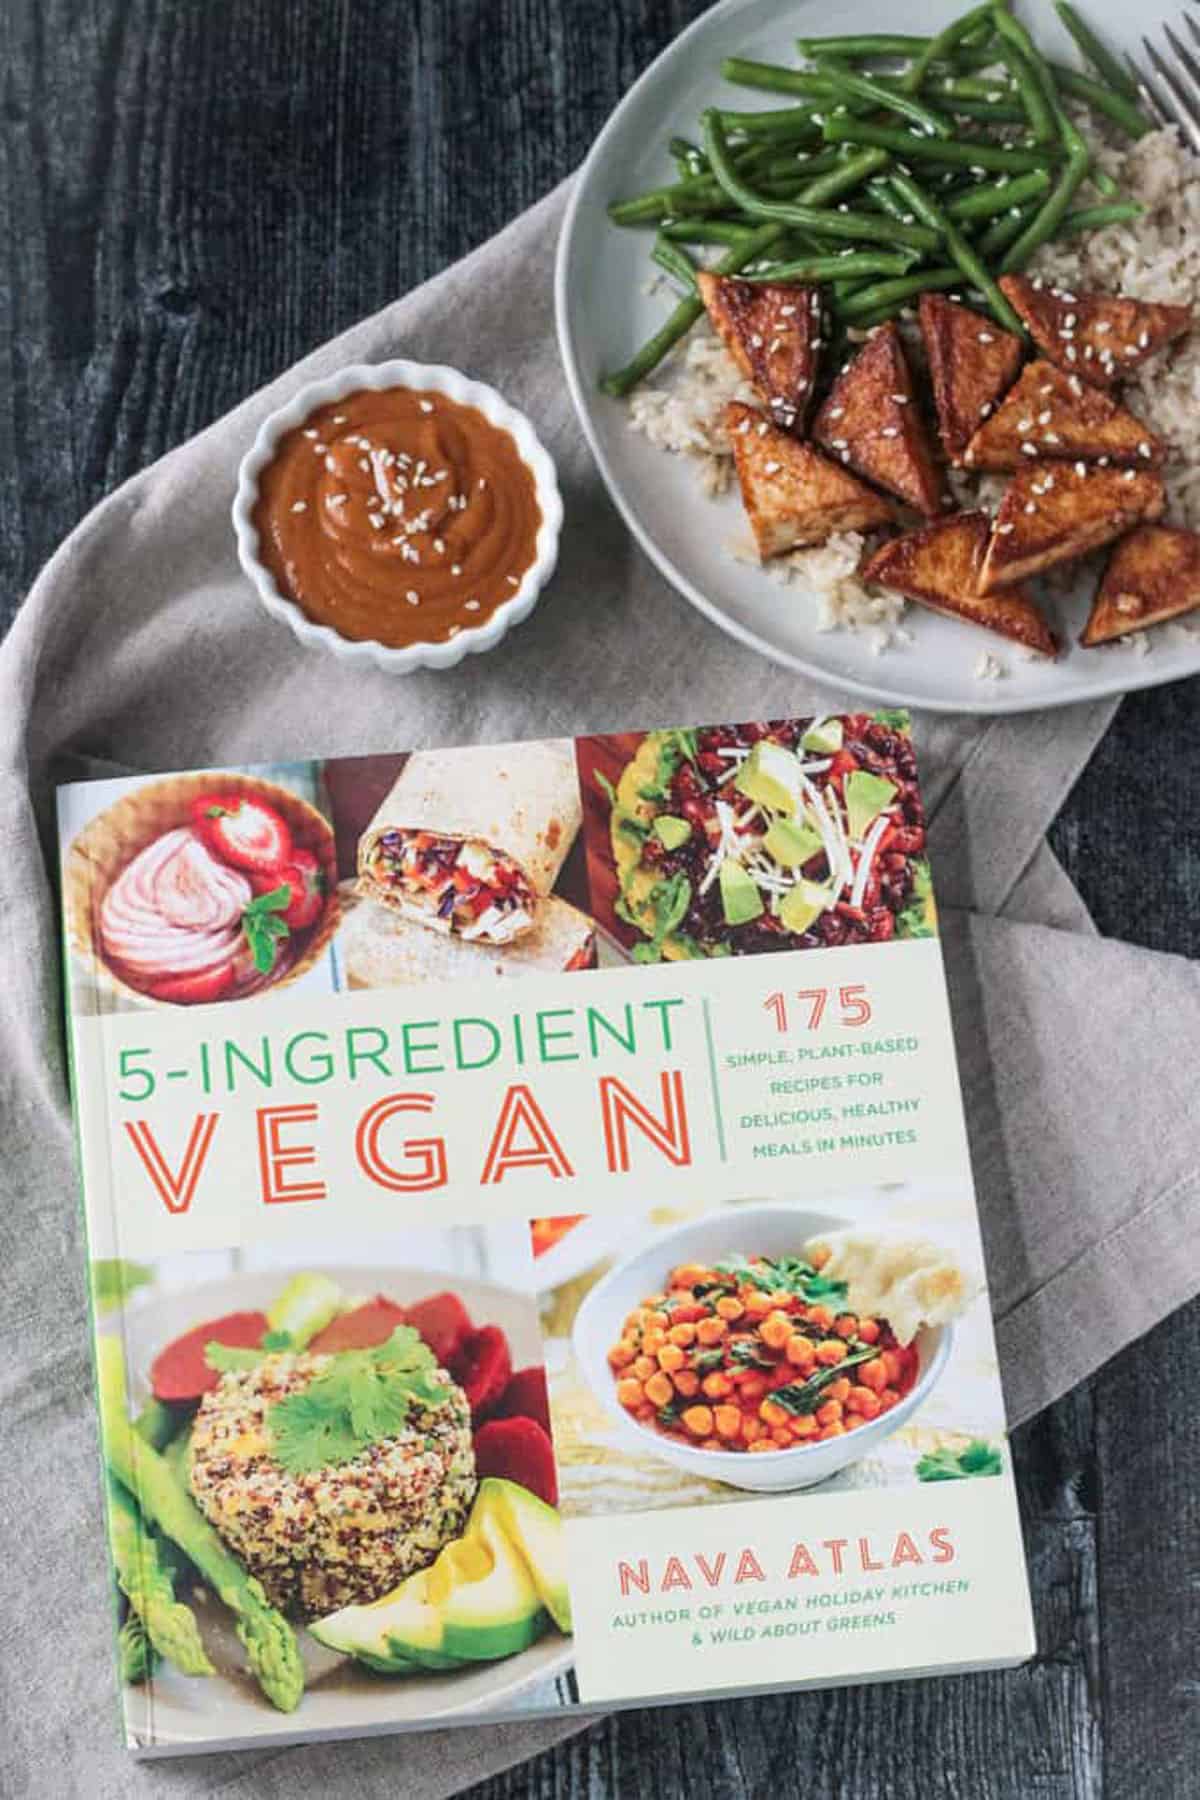 5-Ingredient Vegan cookbook cover